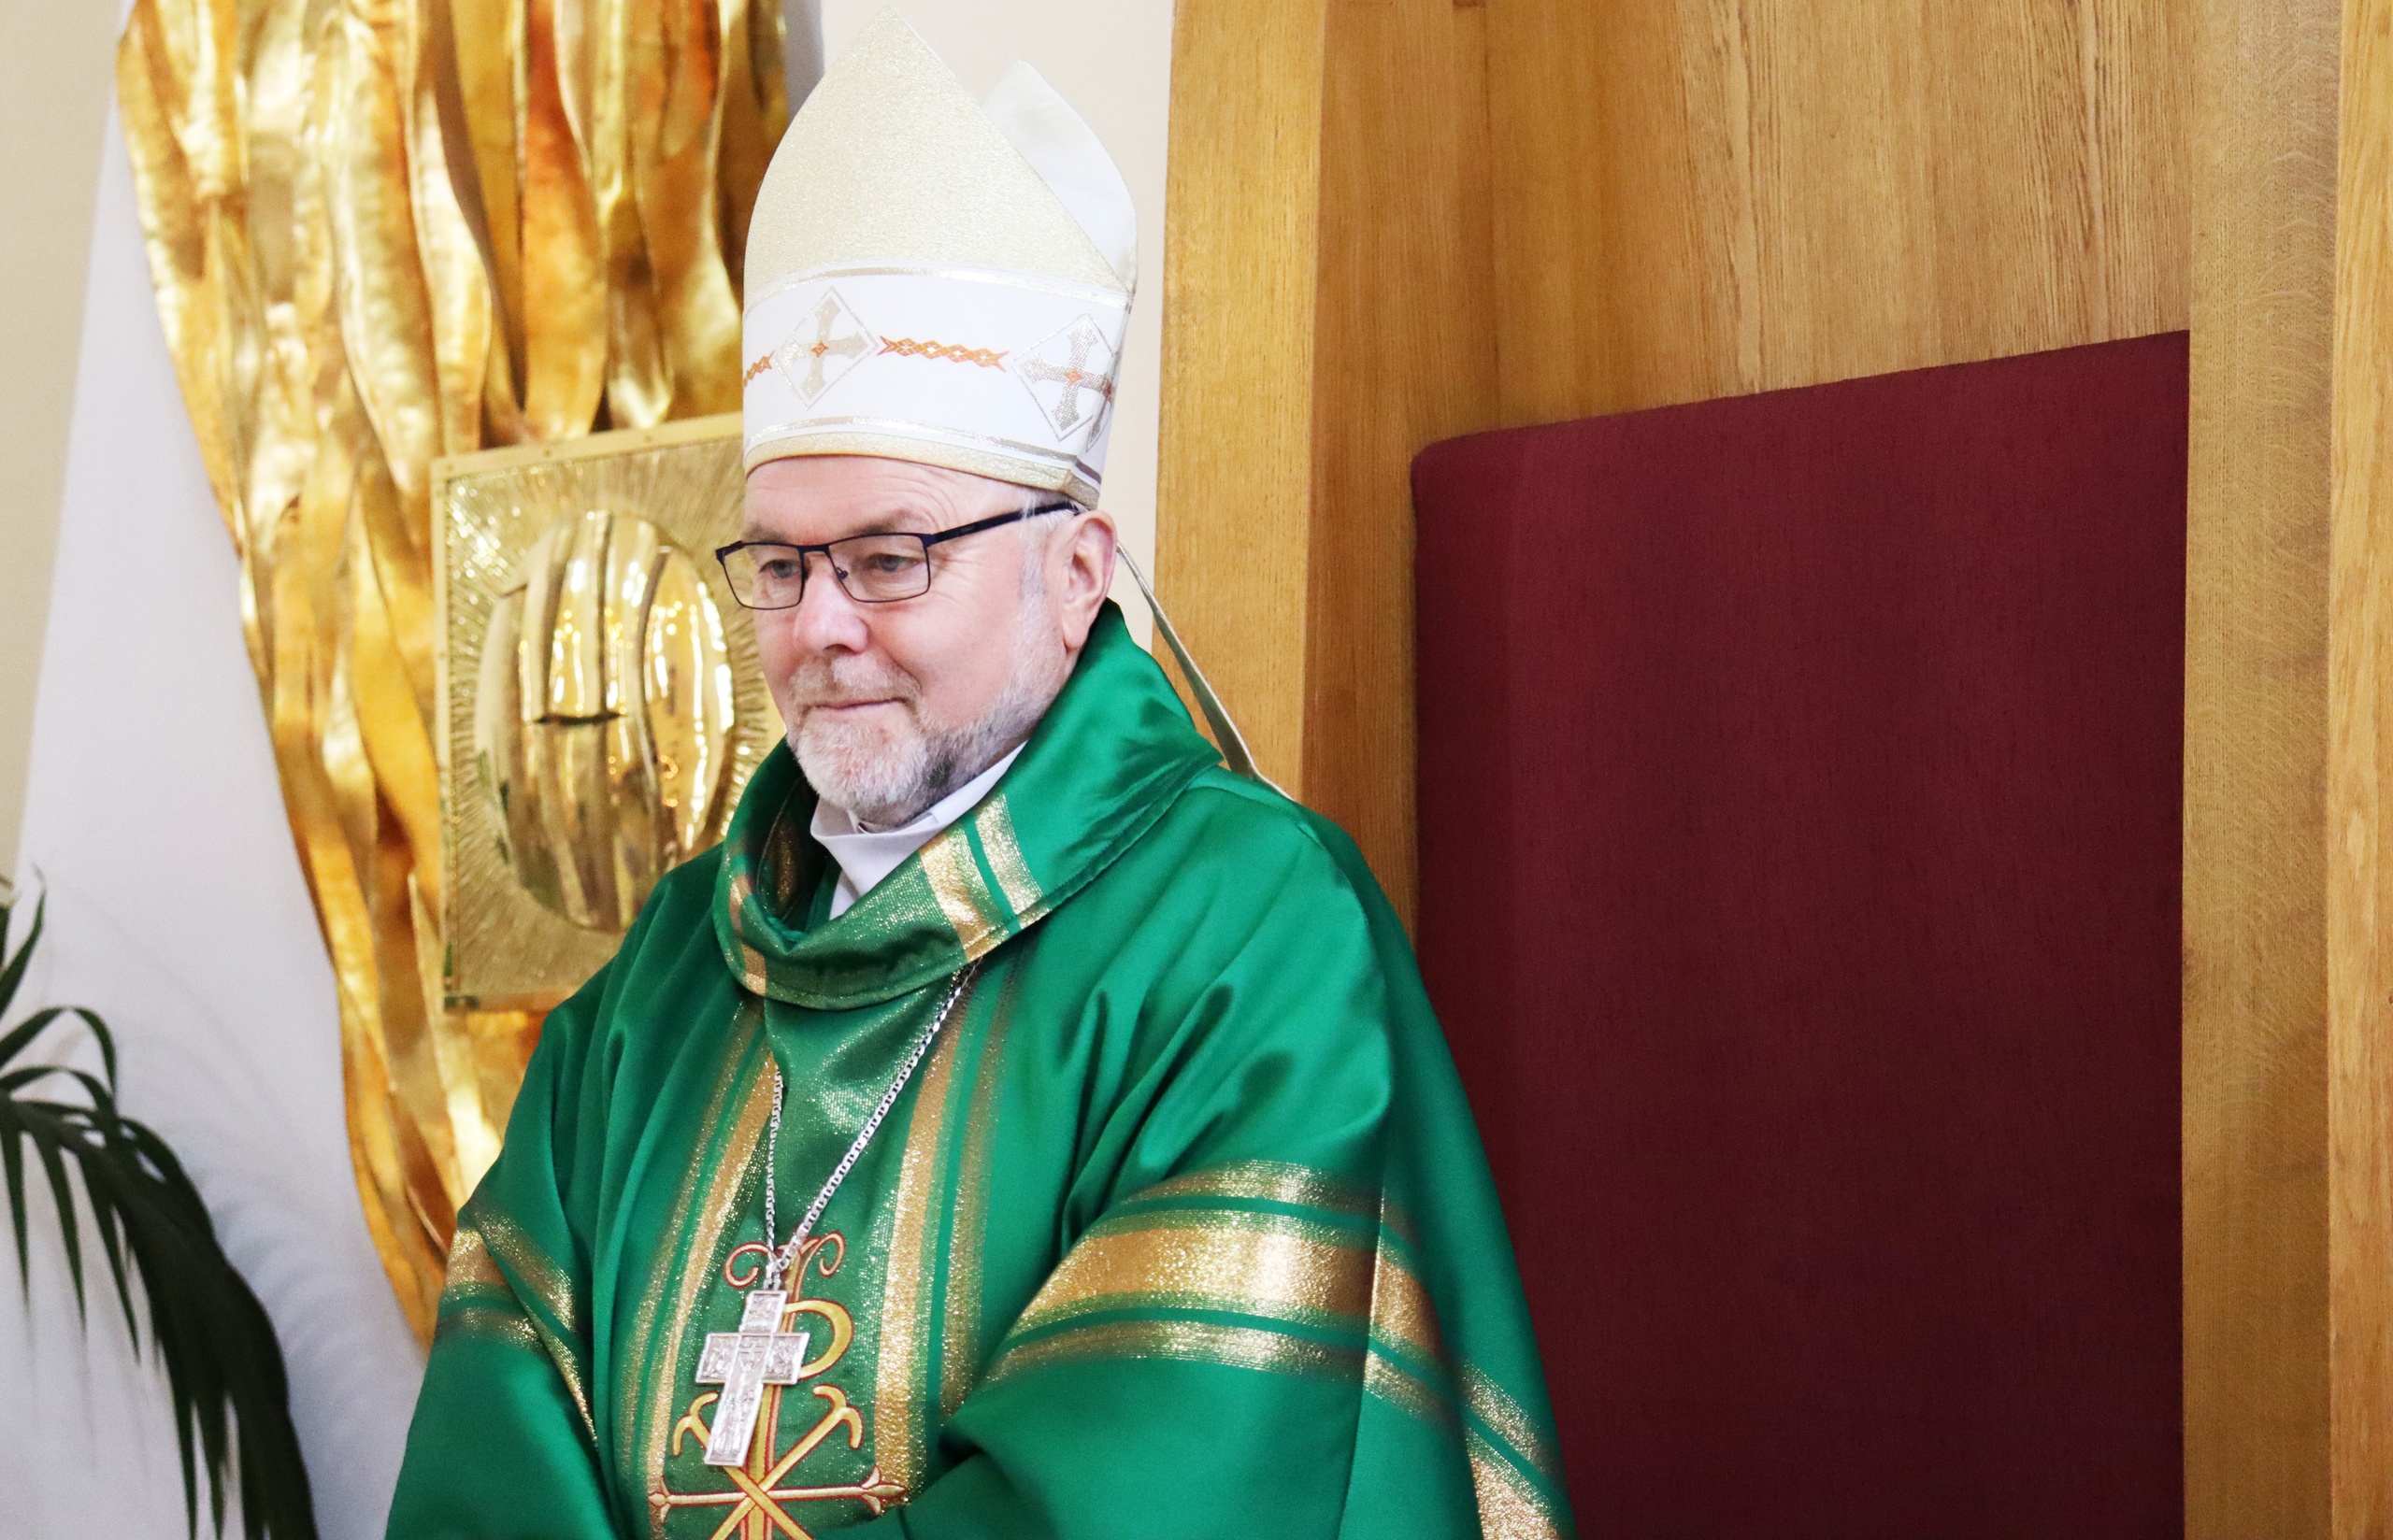 Епископ Кирилл Климович отметил свой 70-летний юбилей